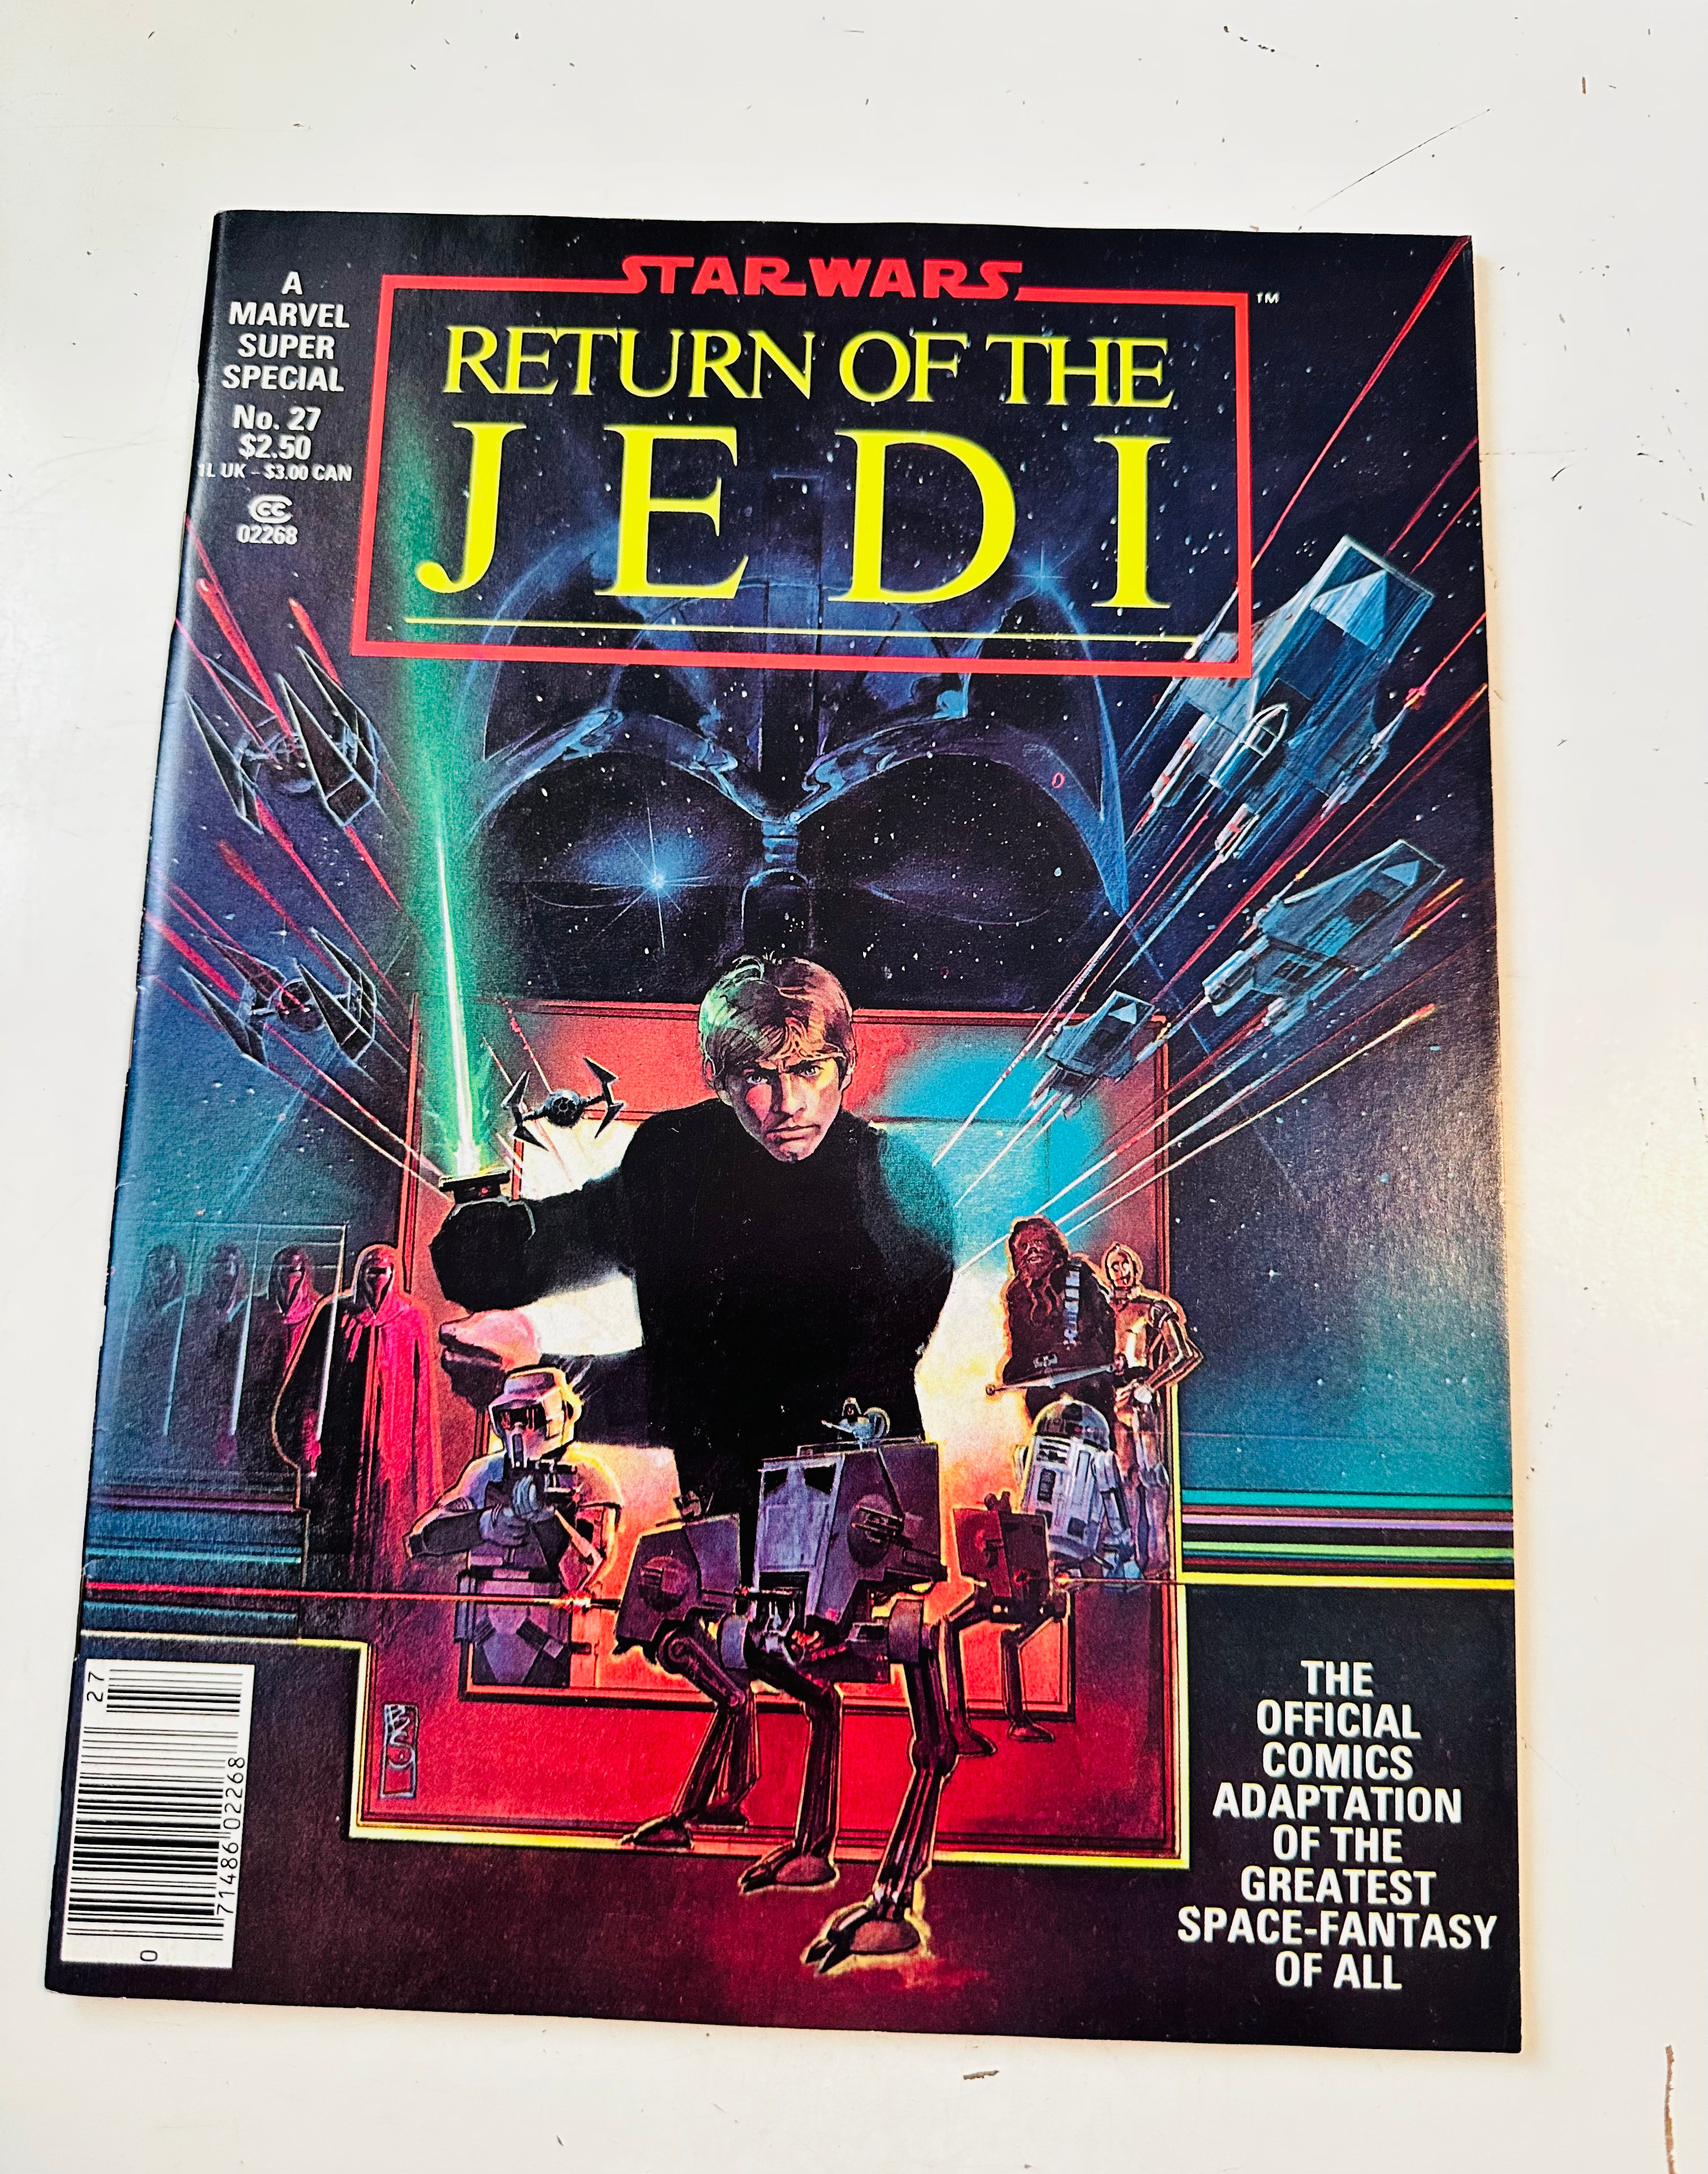 Star Wars Return of the Jedi Marvel Super Special high grade magazine comic 1983